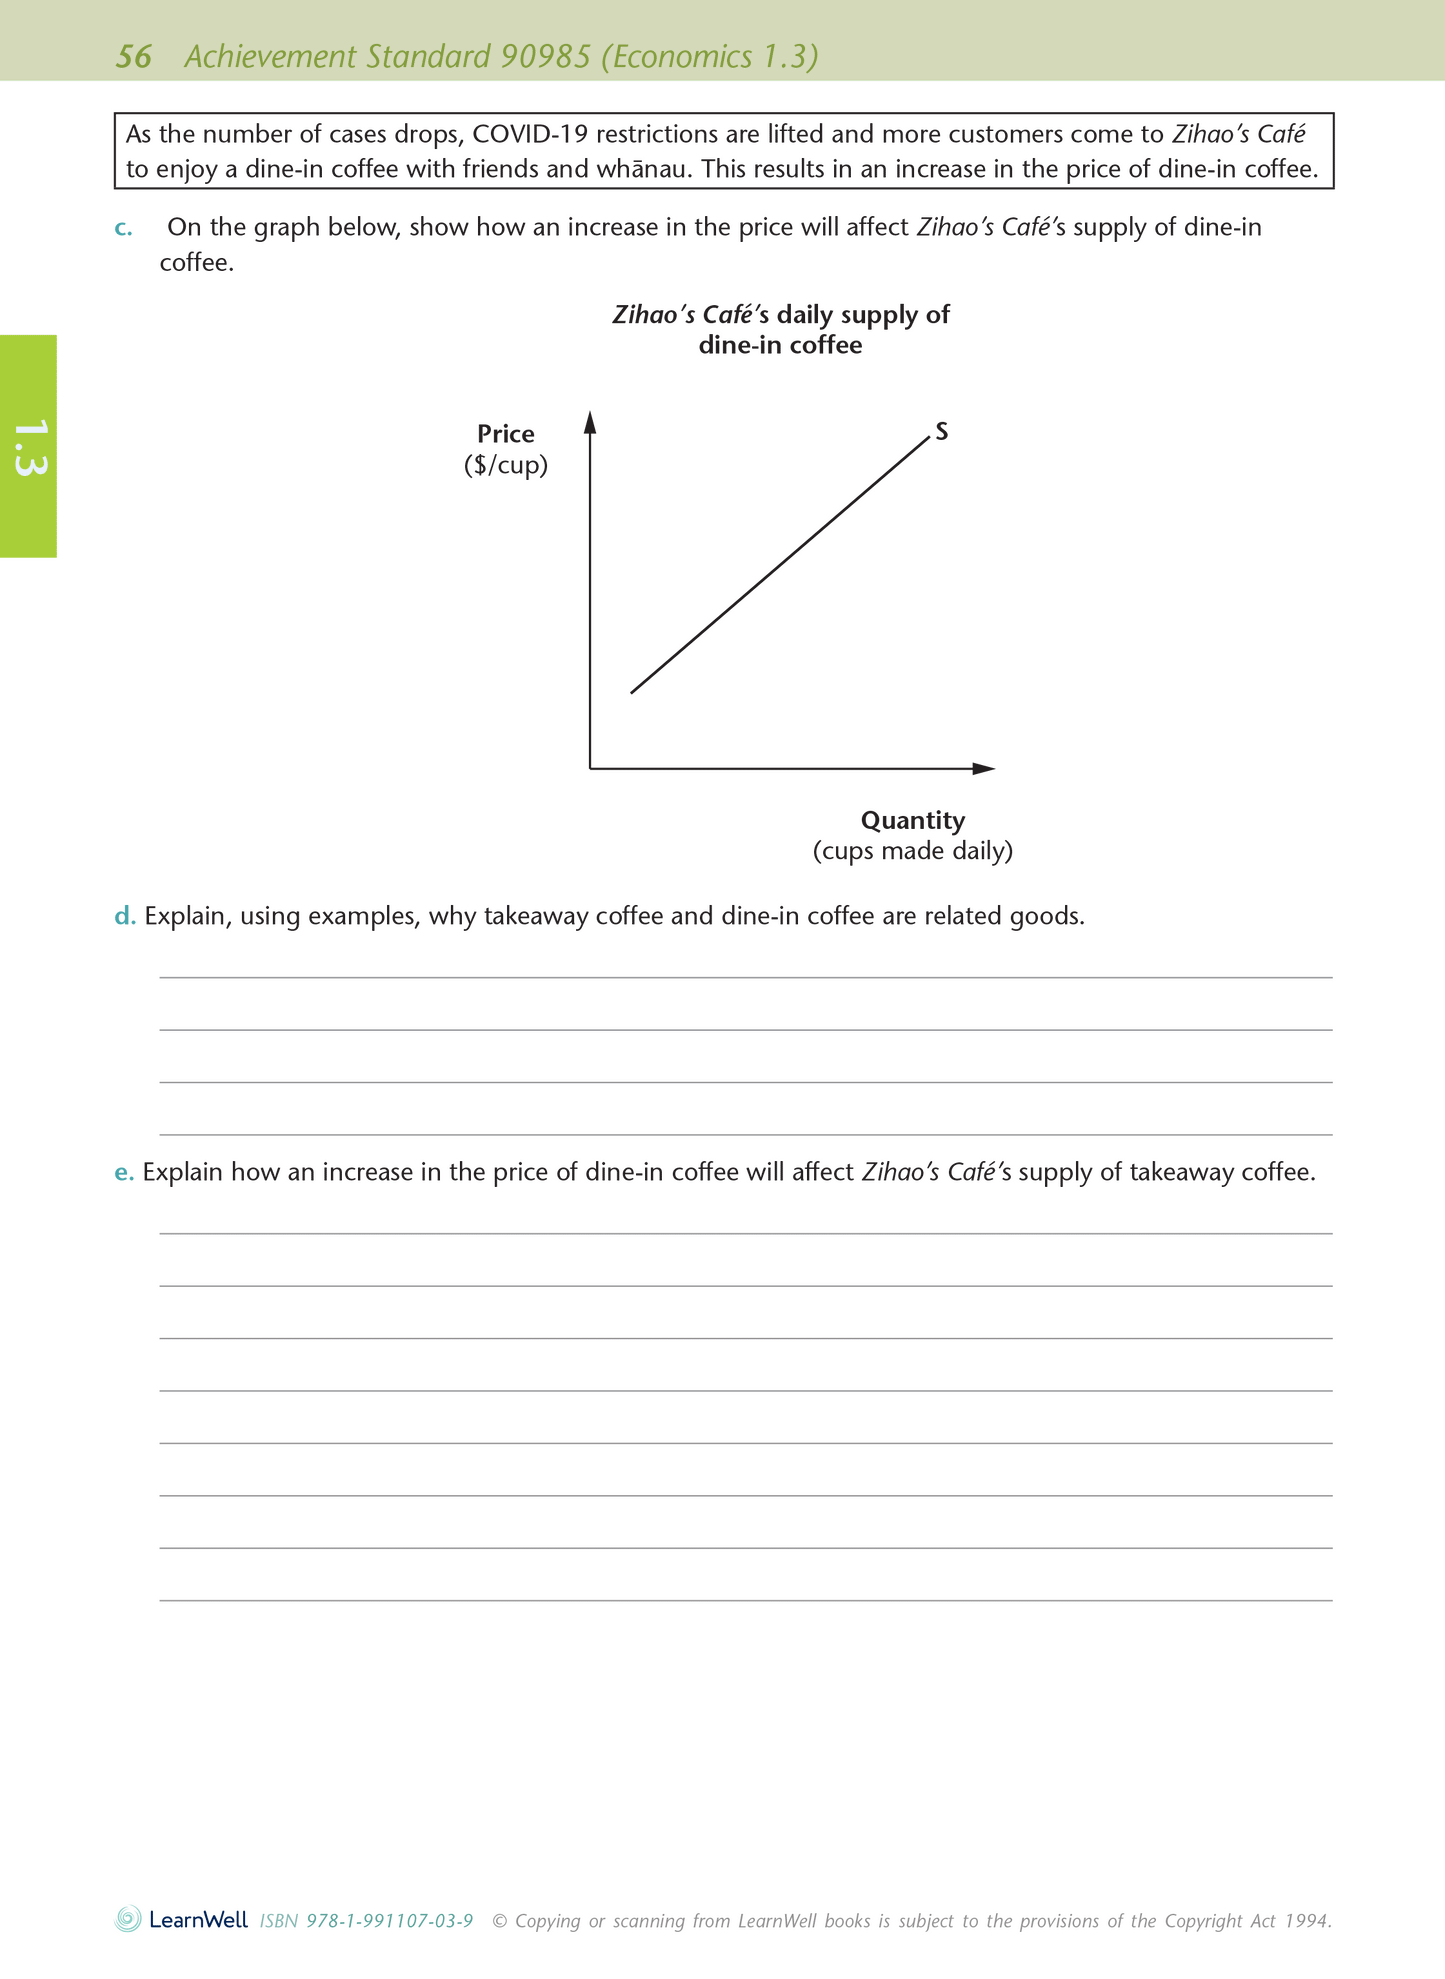 Level 1 Economics AME Workbook